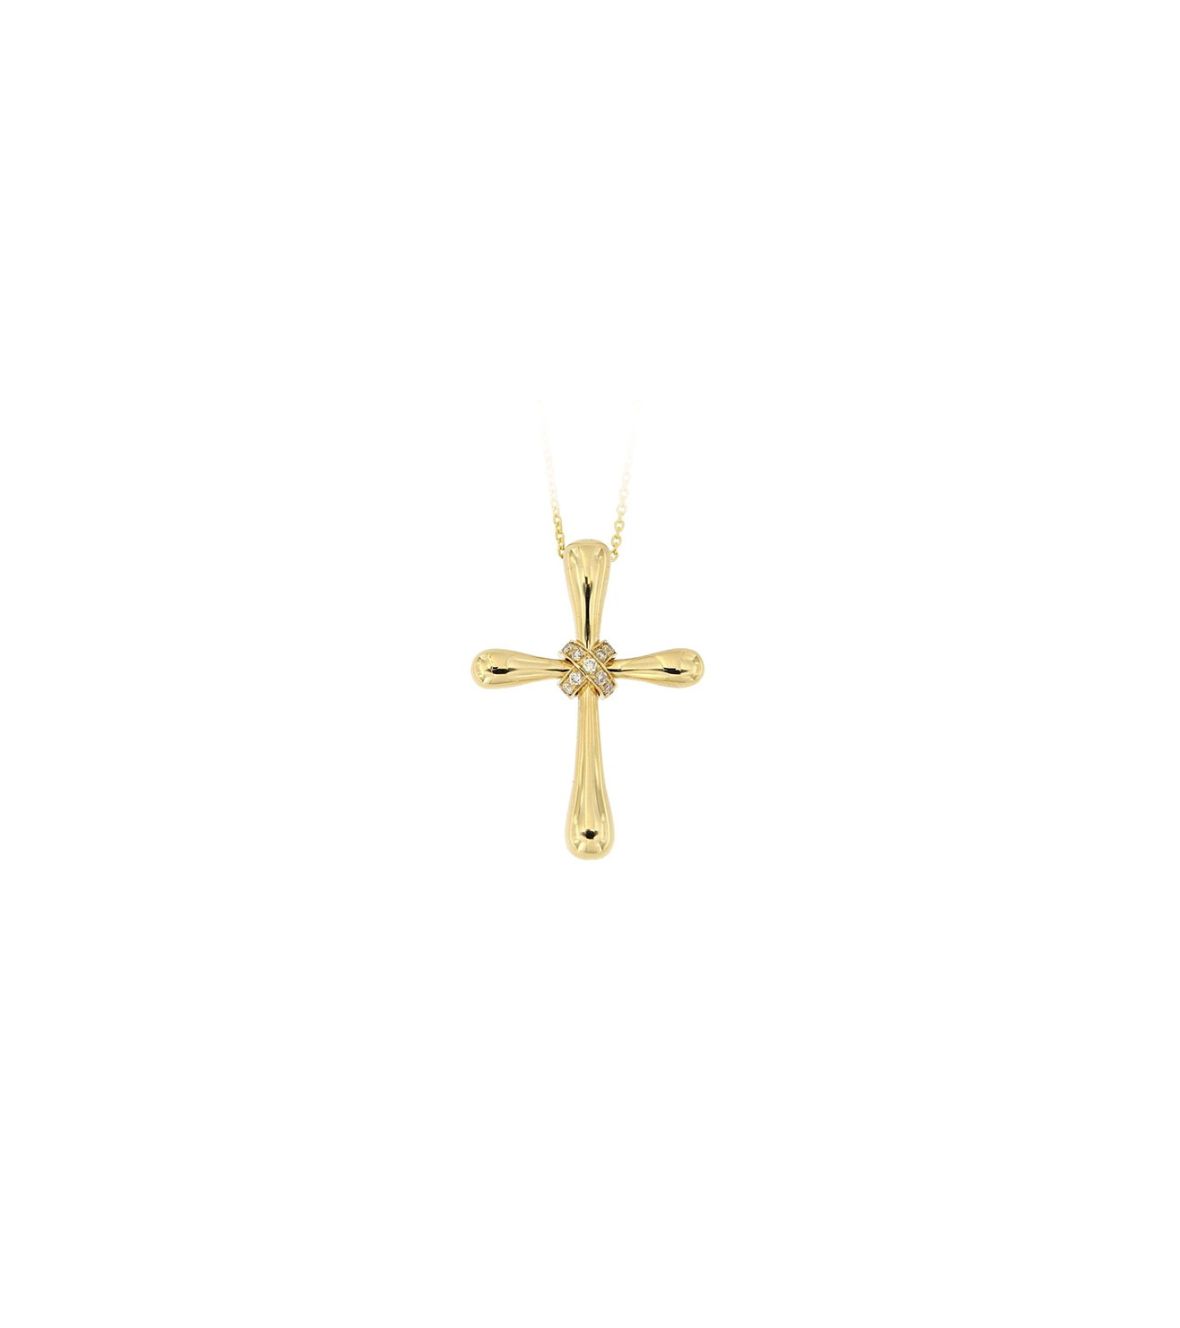 Yello Gold Cross with Diamonds 03174